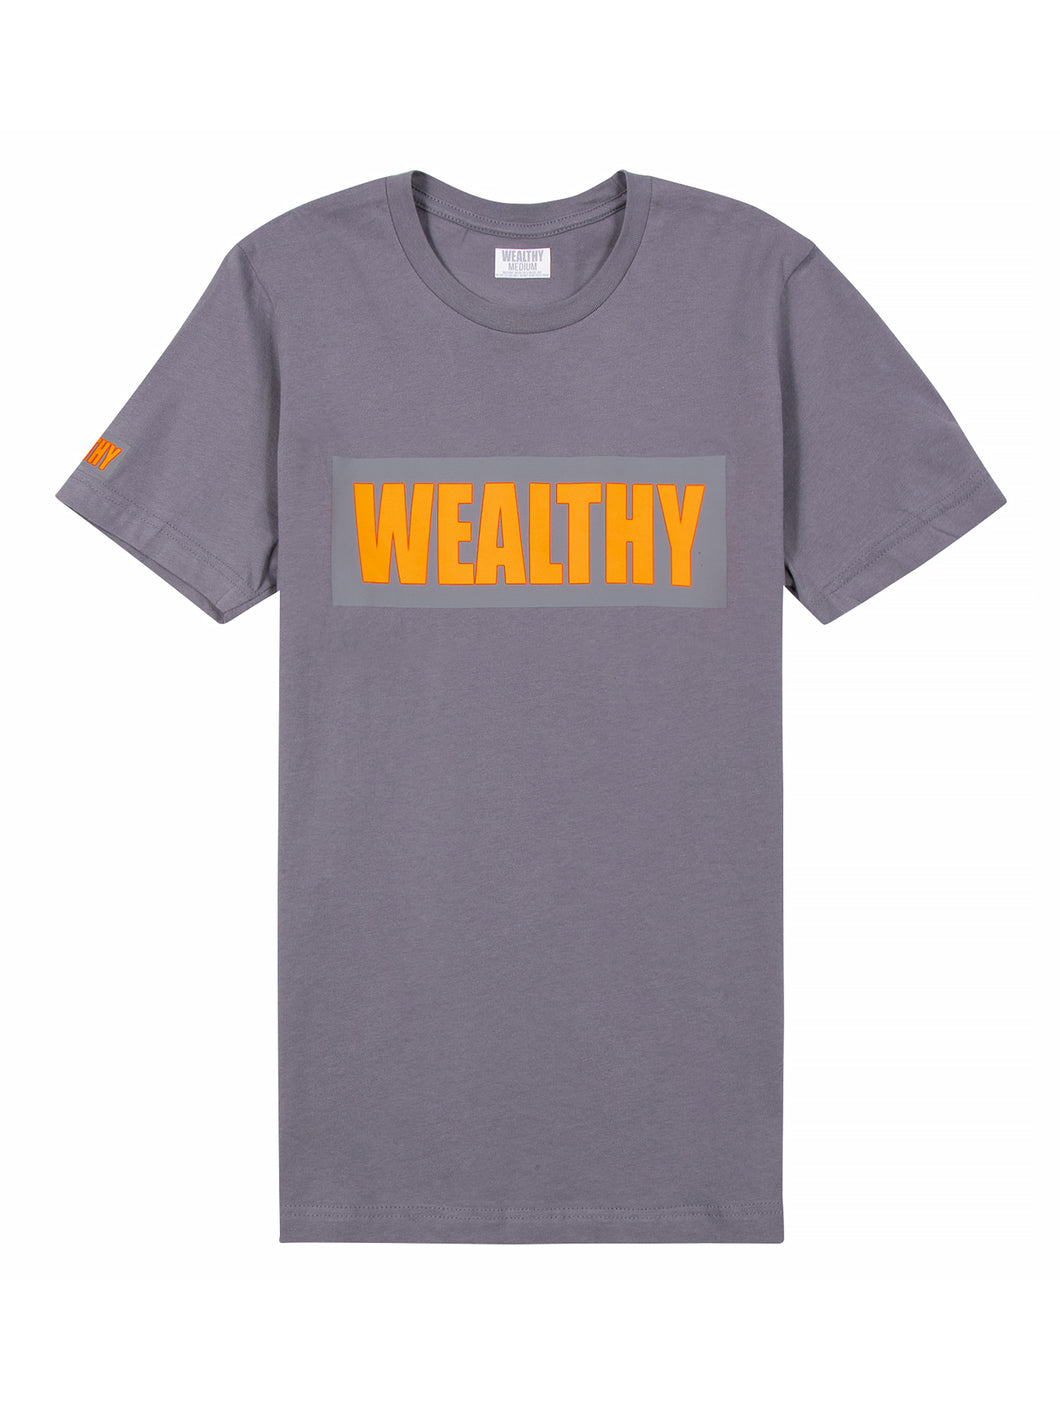 Wealthy Tee (Grey/Grey/Neon Orange)